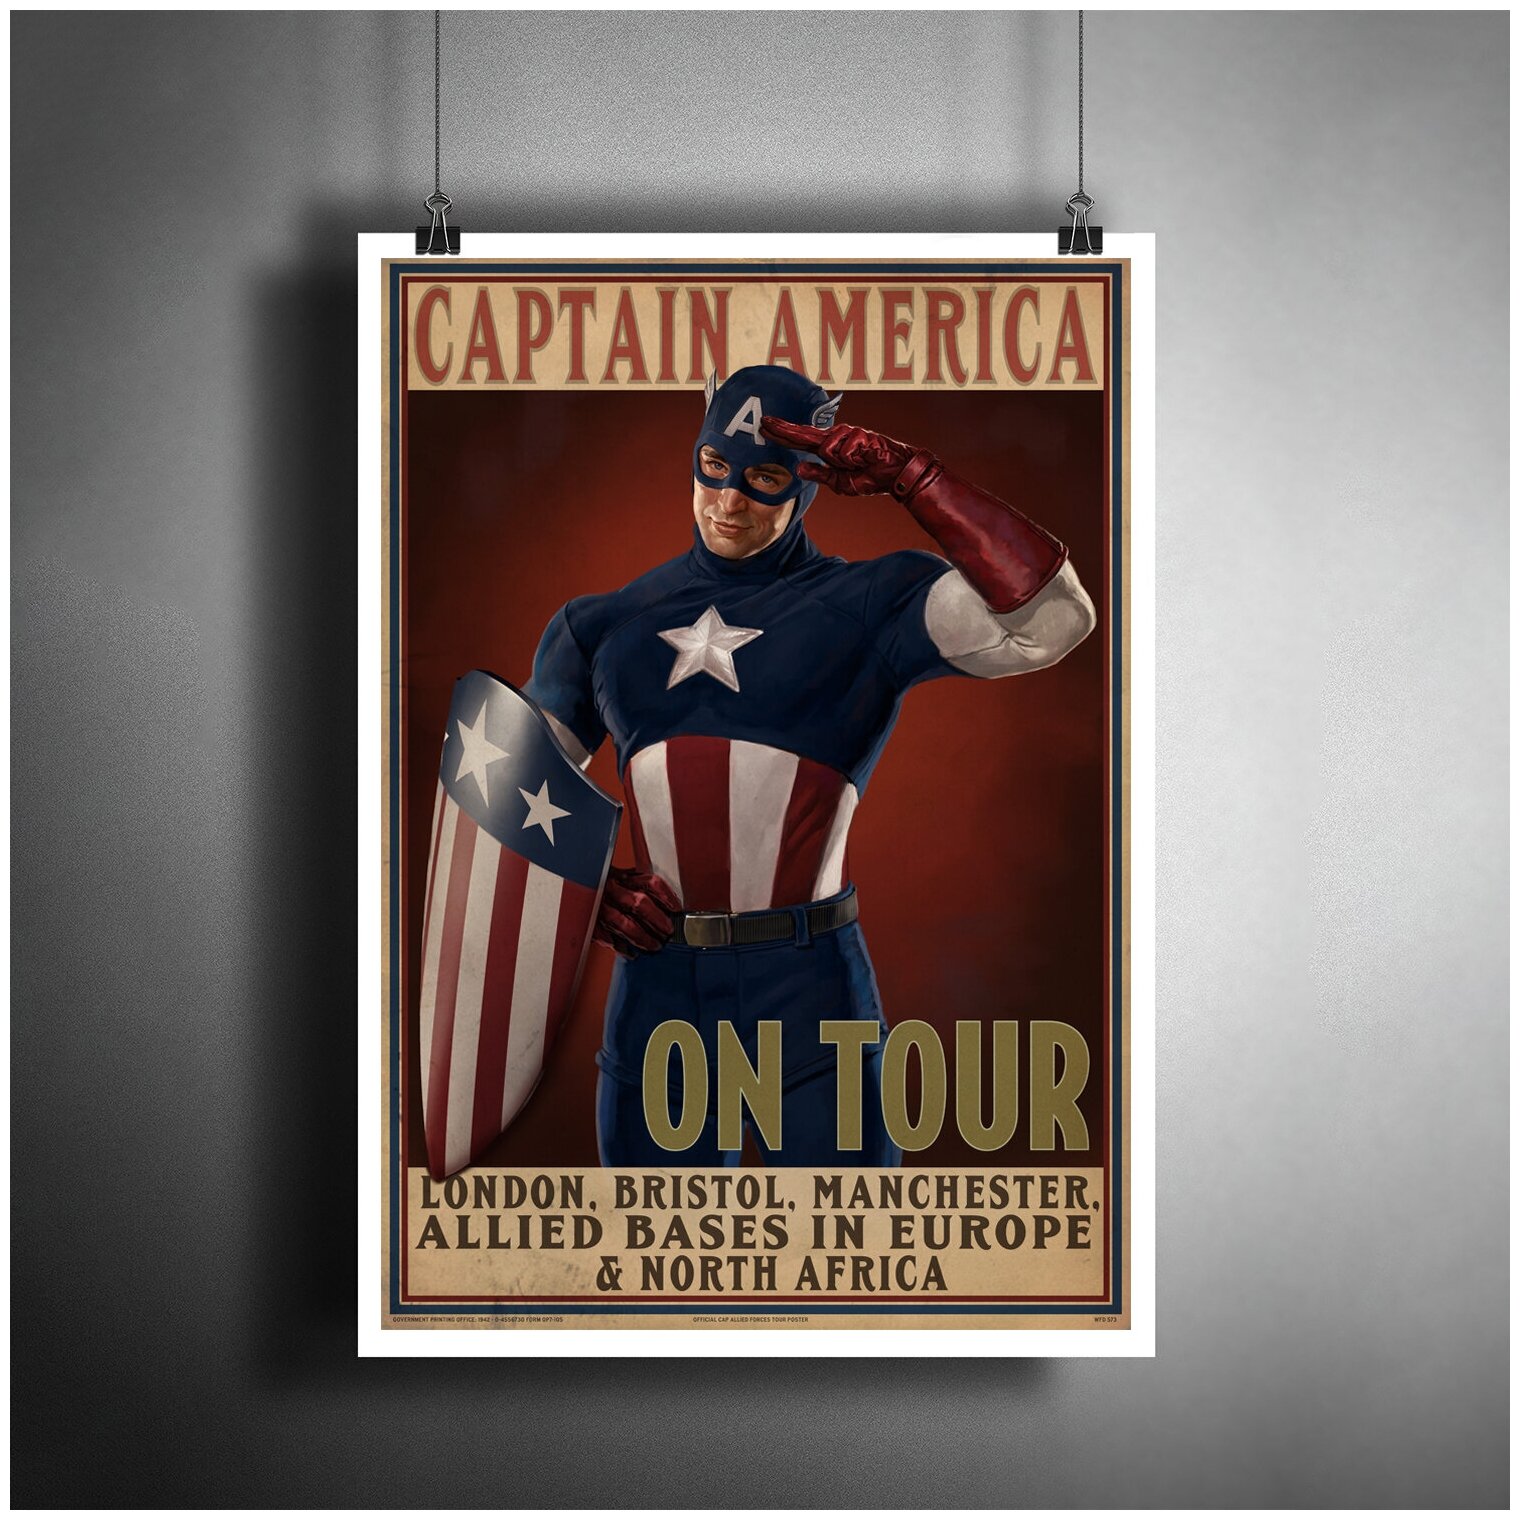 Постер плакат для интерьера "THE AVENGERS - CAPTAIN AMERICA (мстители - капитан америка)"/ Декор дома, офиса, комнаты A3 (297 x 420 мм)